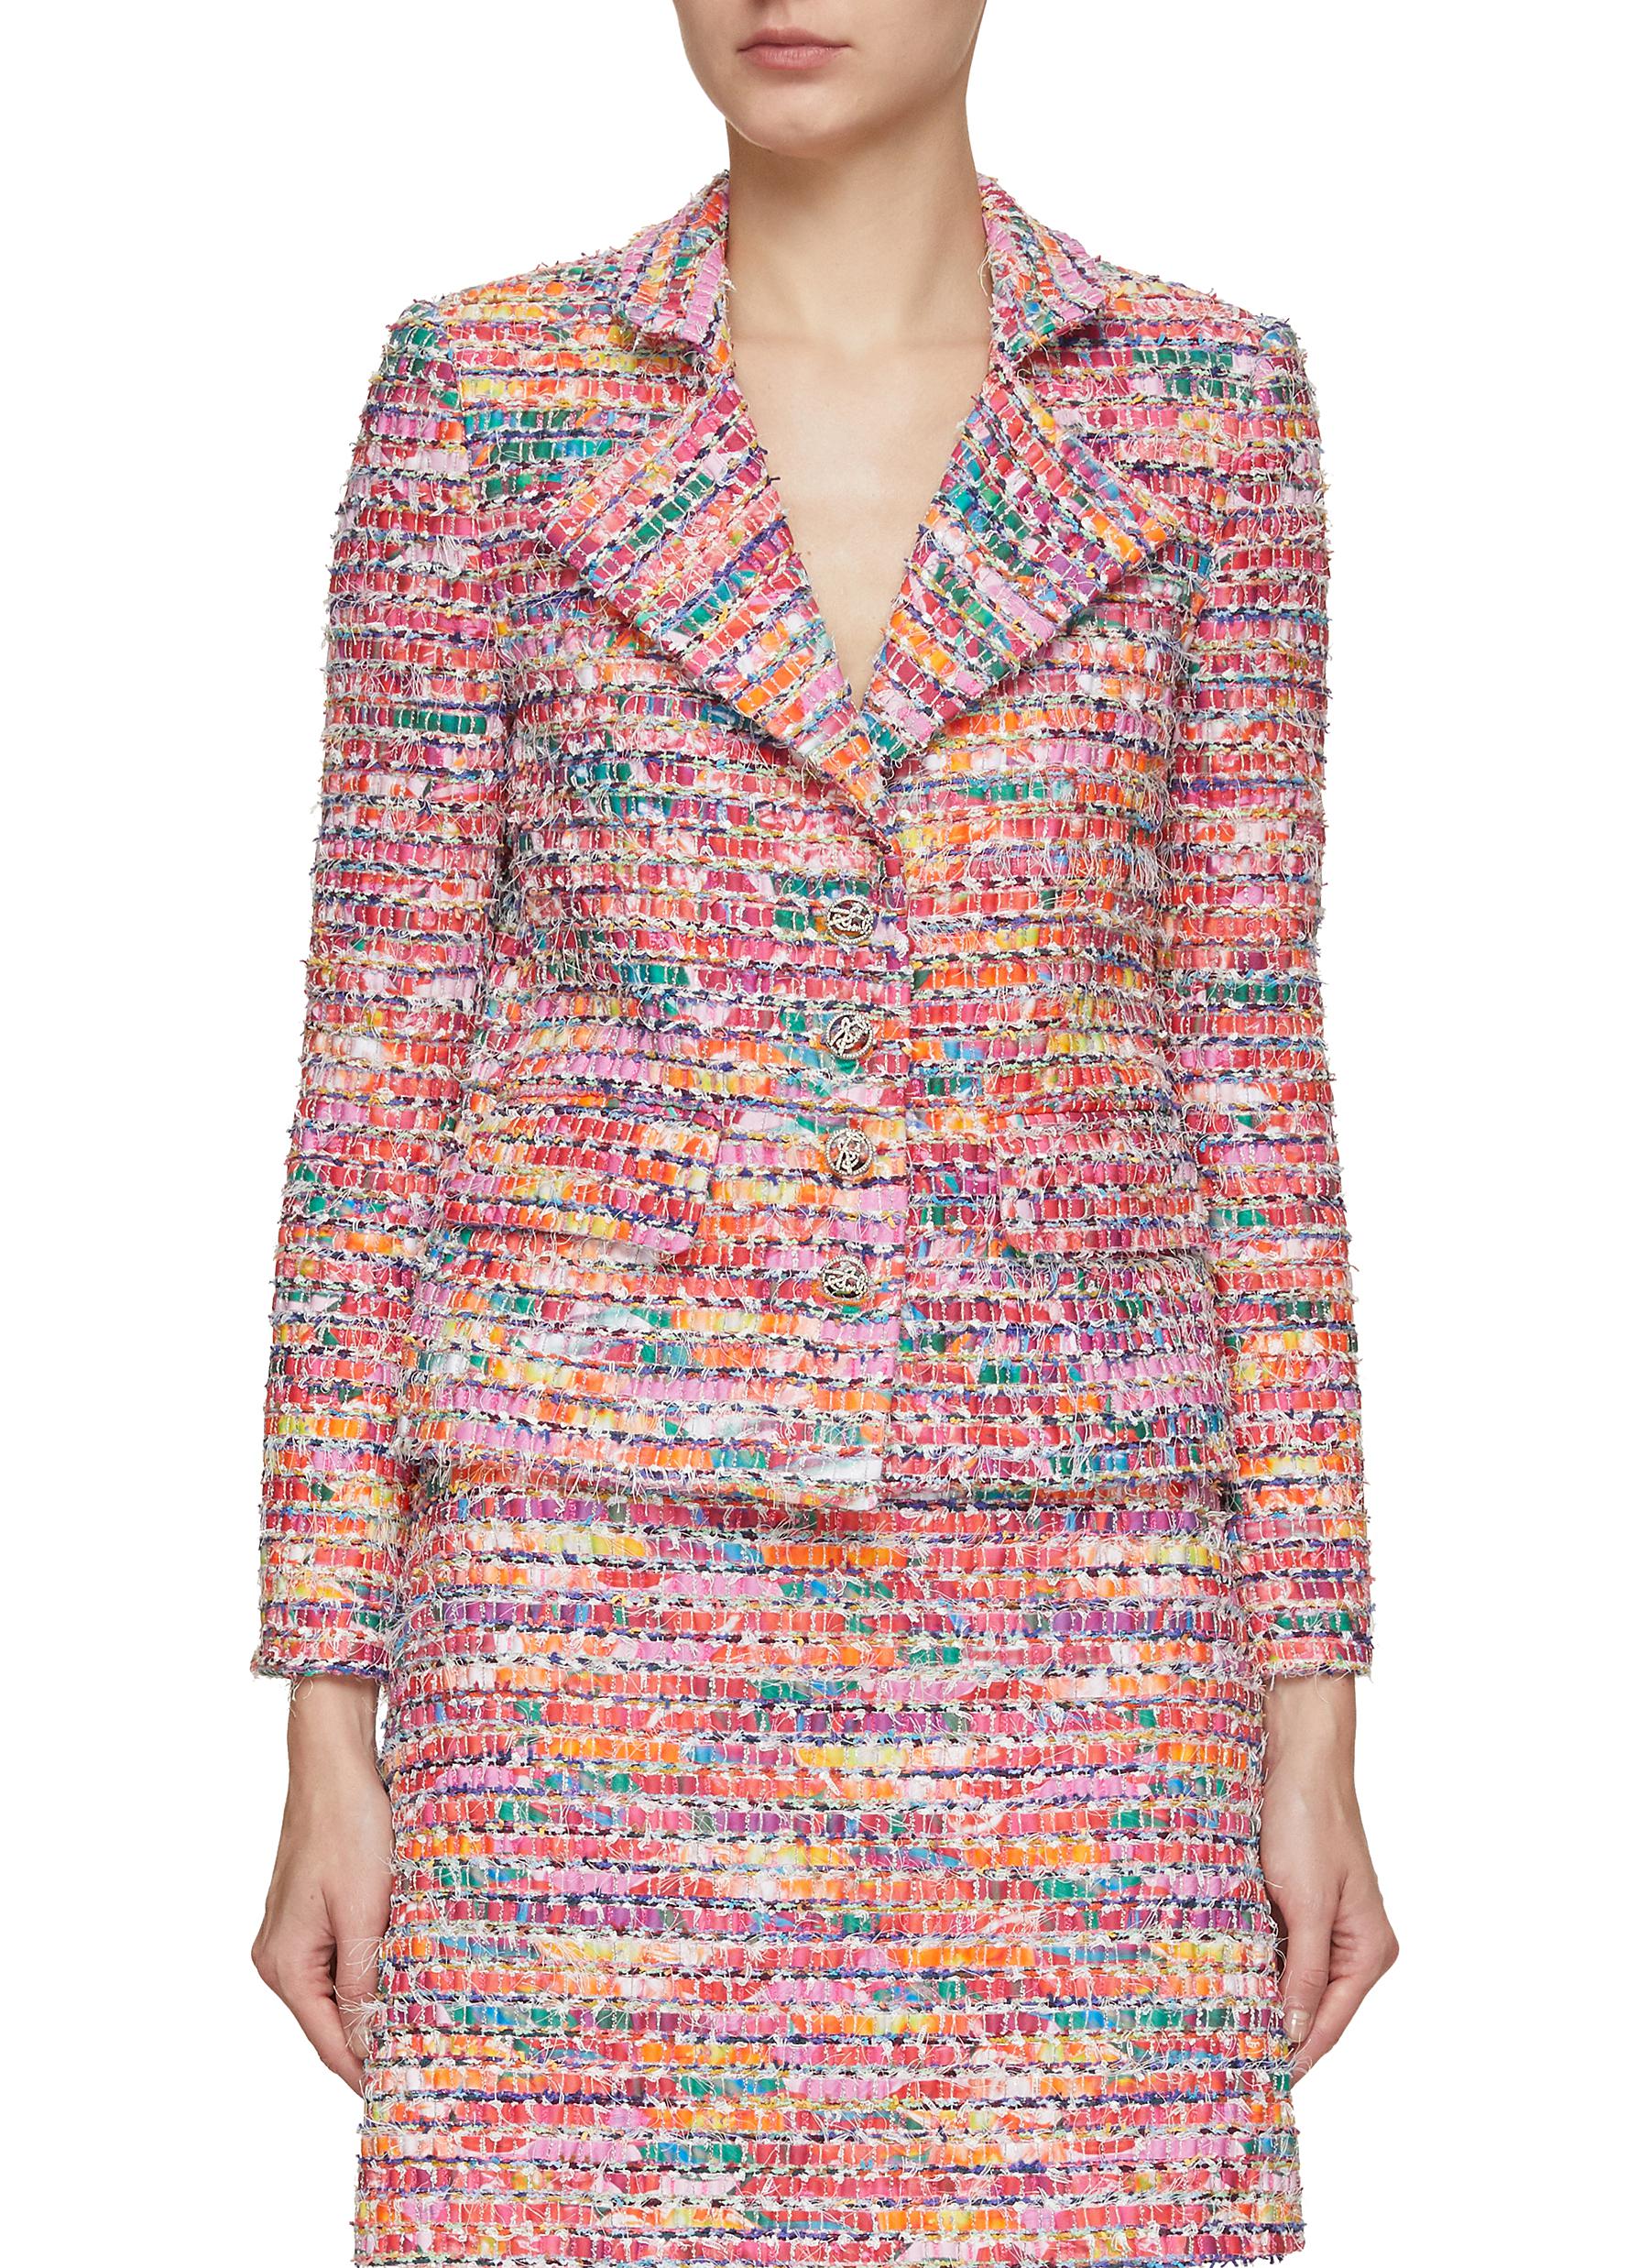 Tweed - Women's Designer Tweed Jackets, Skirts, & Dresses – Endless Rose